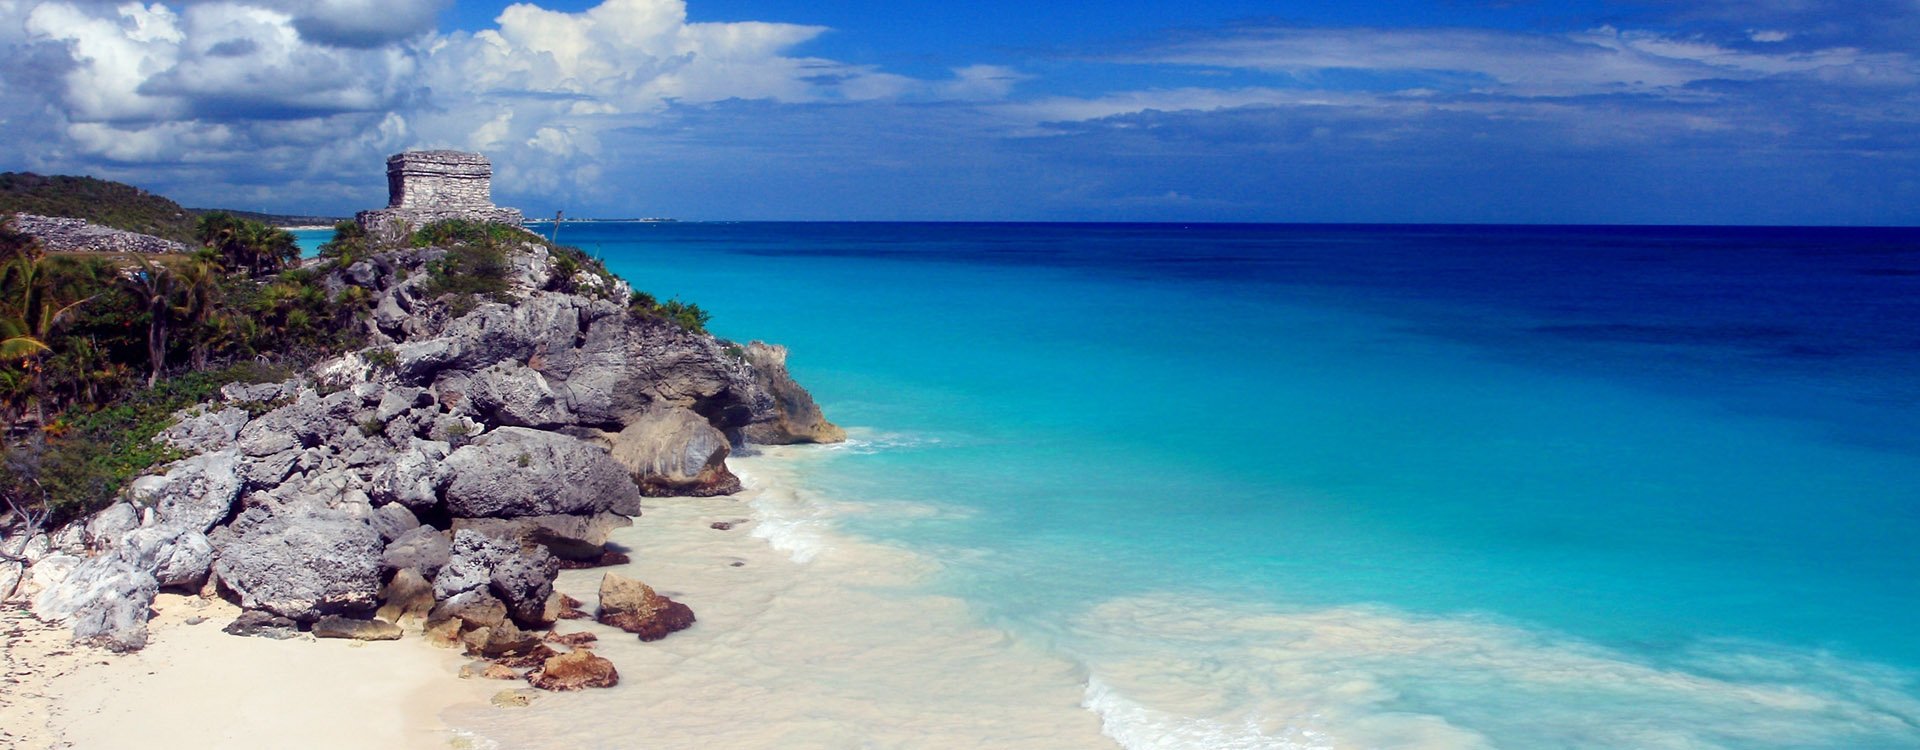 Mayan ruins and beautiful Caribbean beach in Tulum Mexico